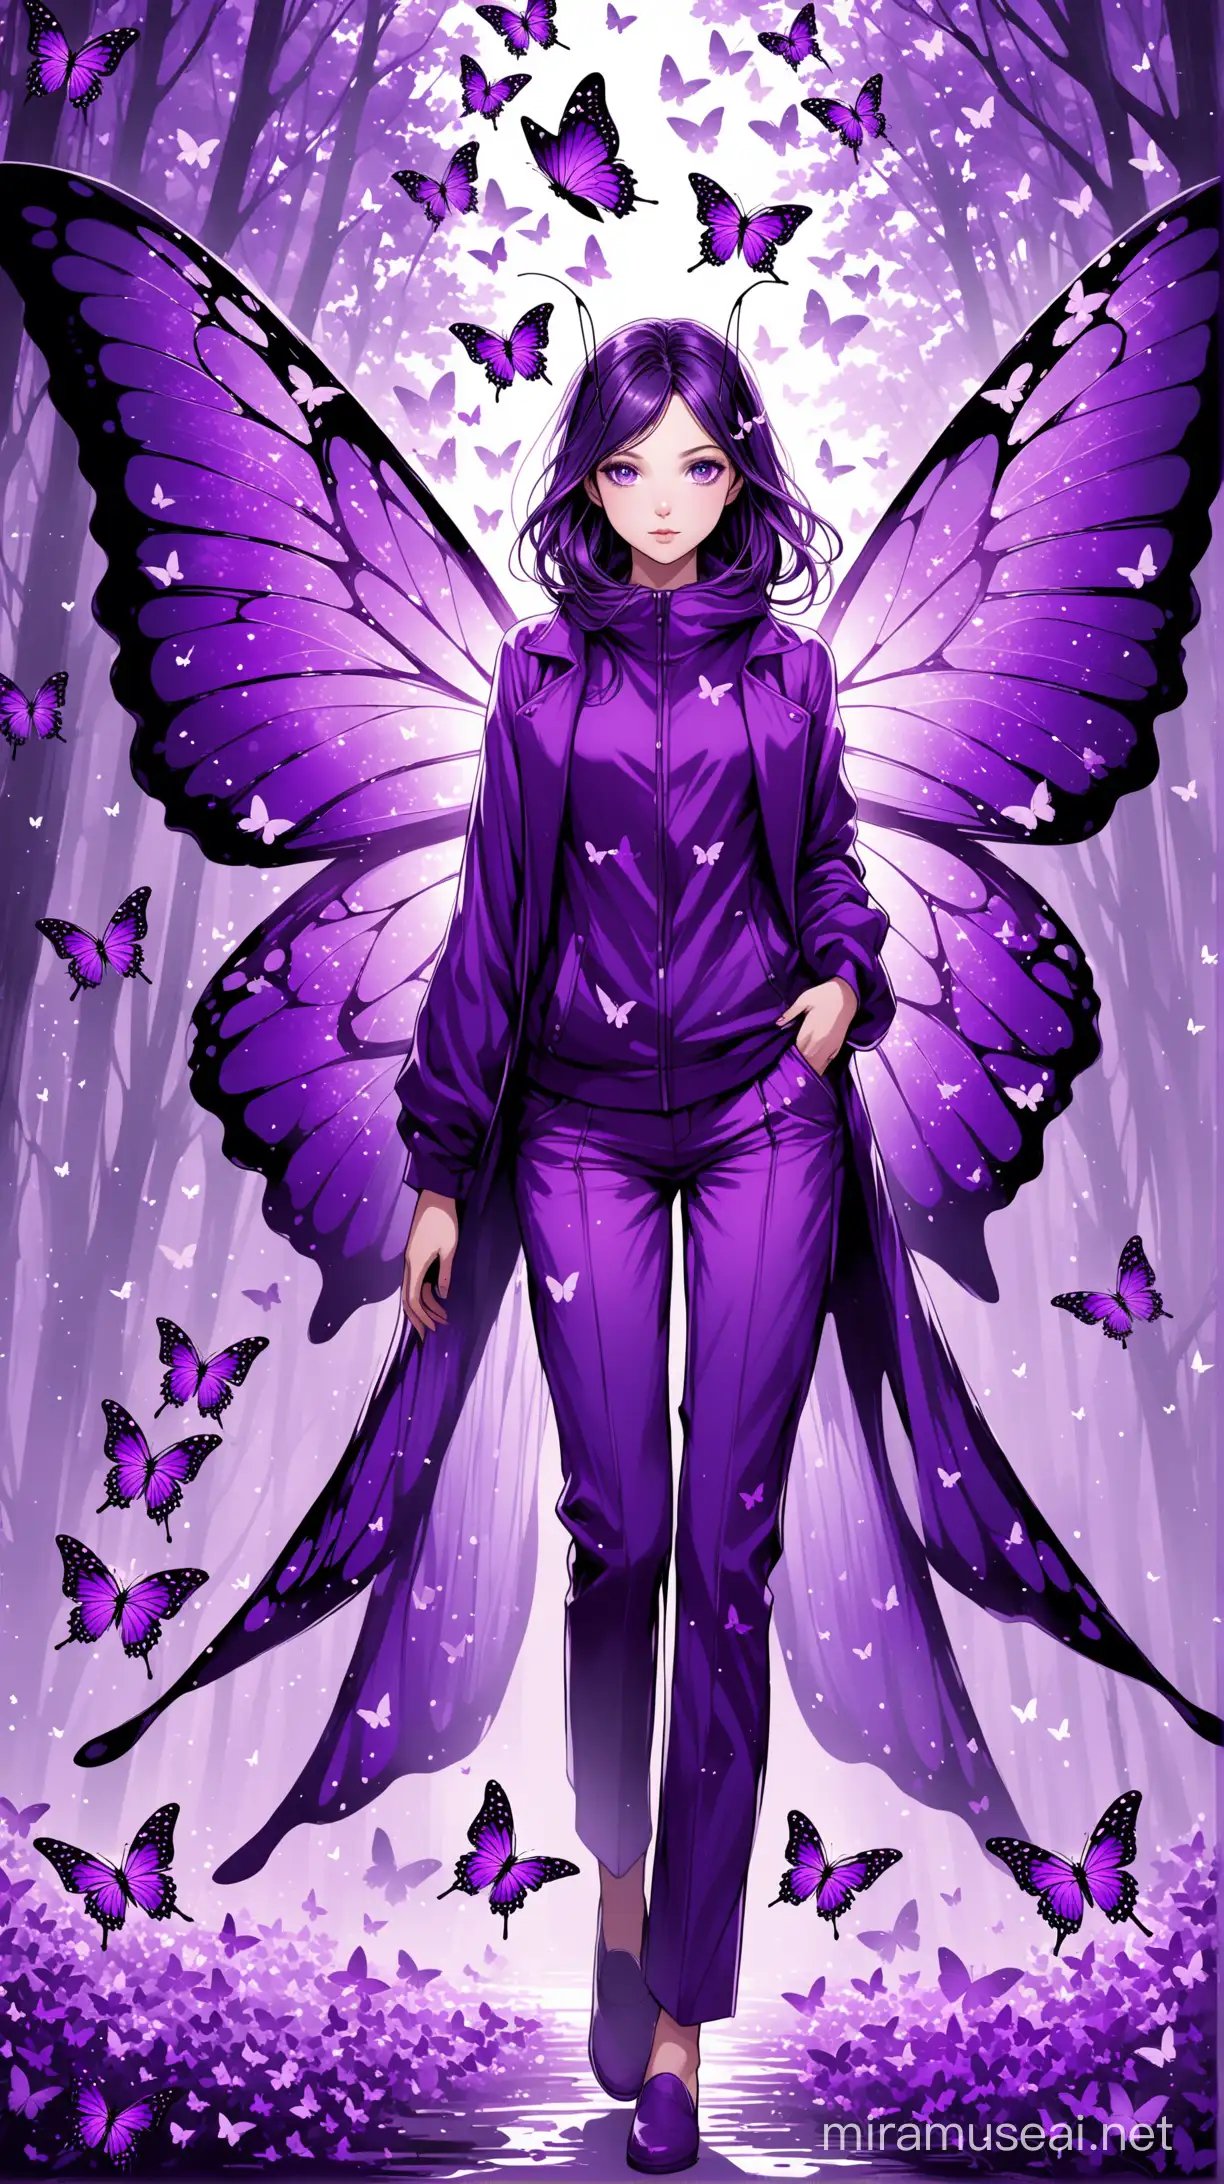 Ethereal Purple Butterfly Woman in Enchanting Attire